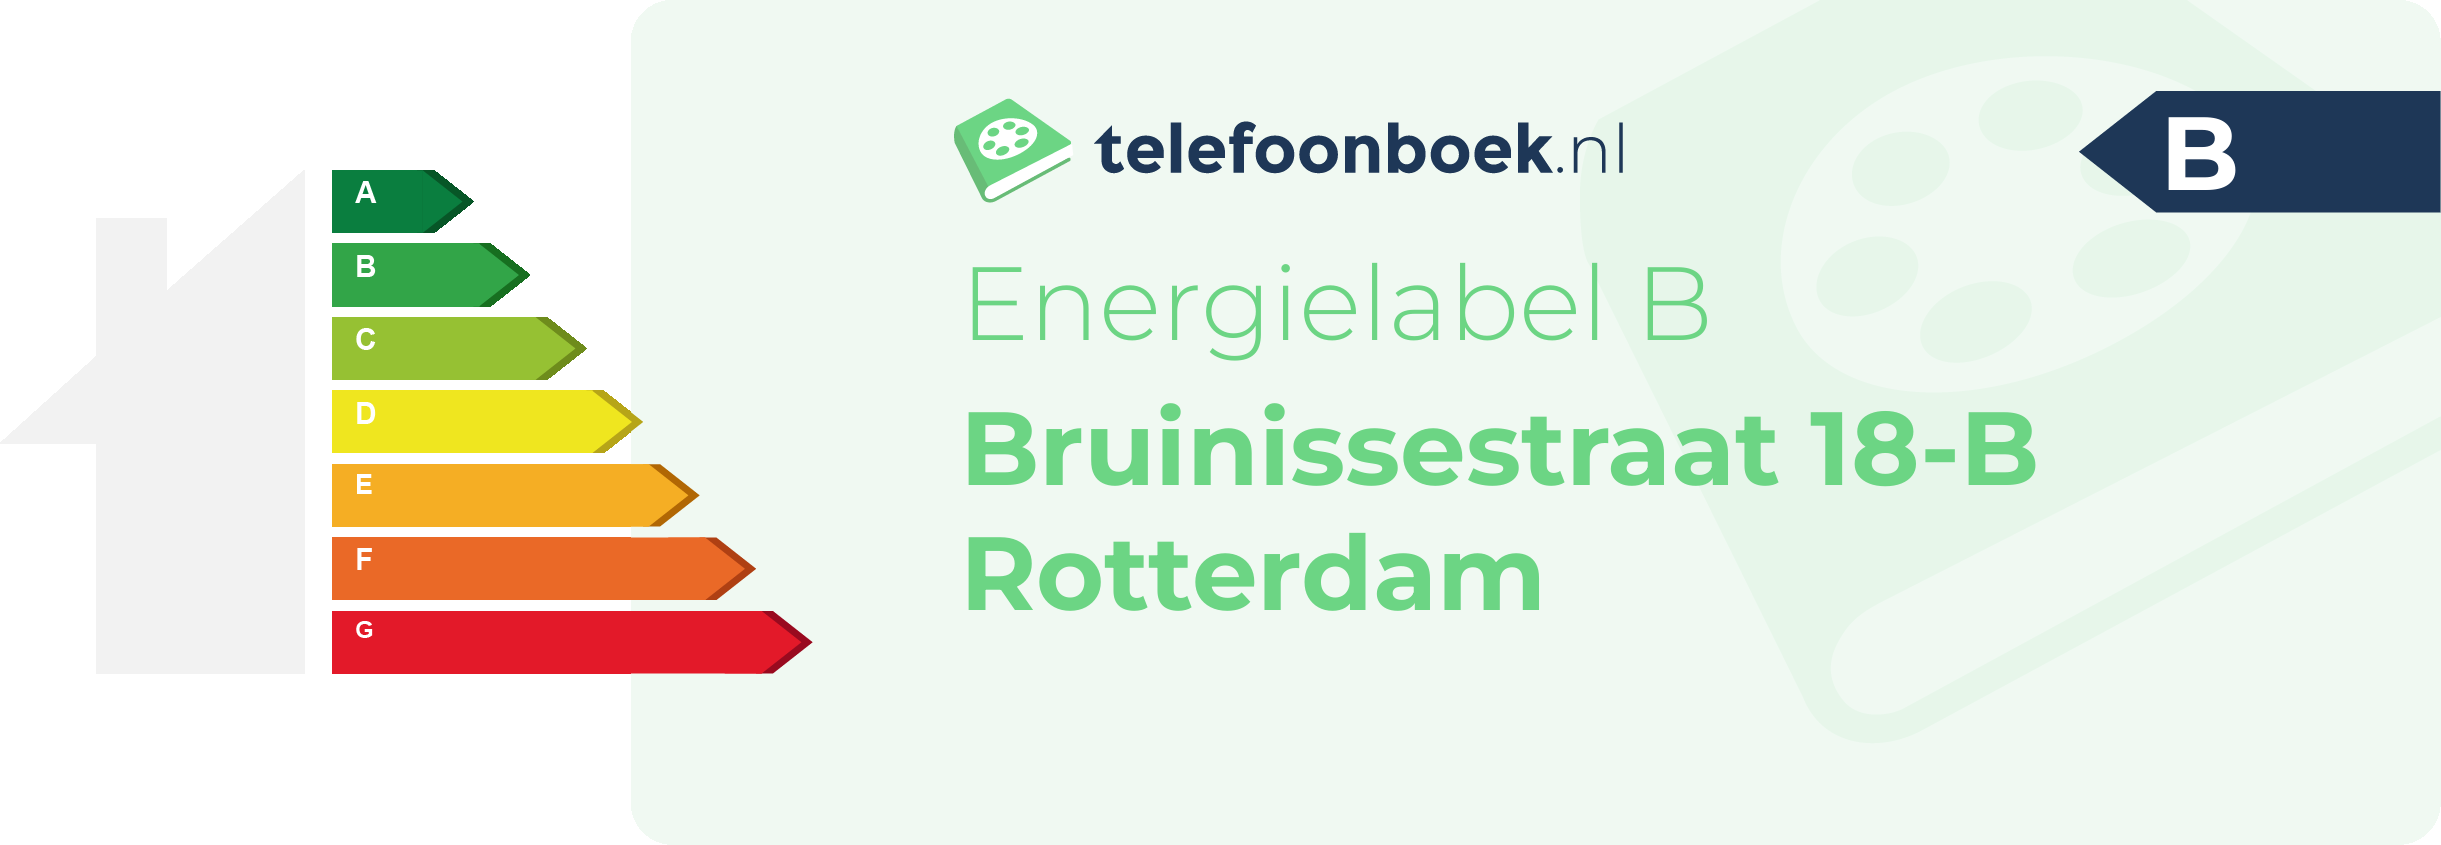 Energielabel Bruinissestraat 18-B Rotterdam